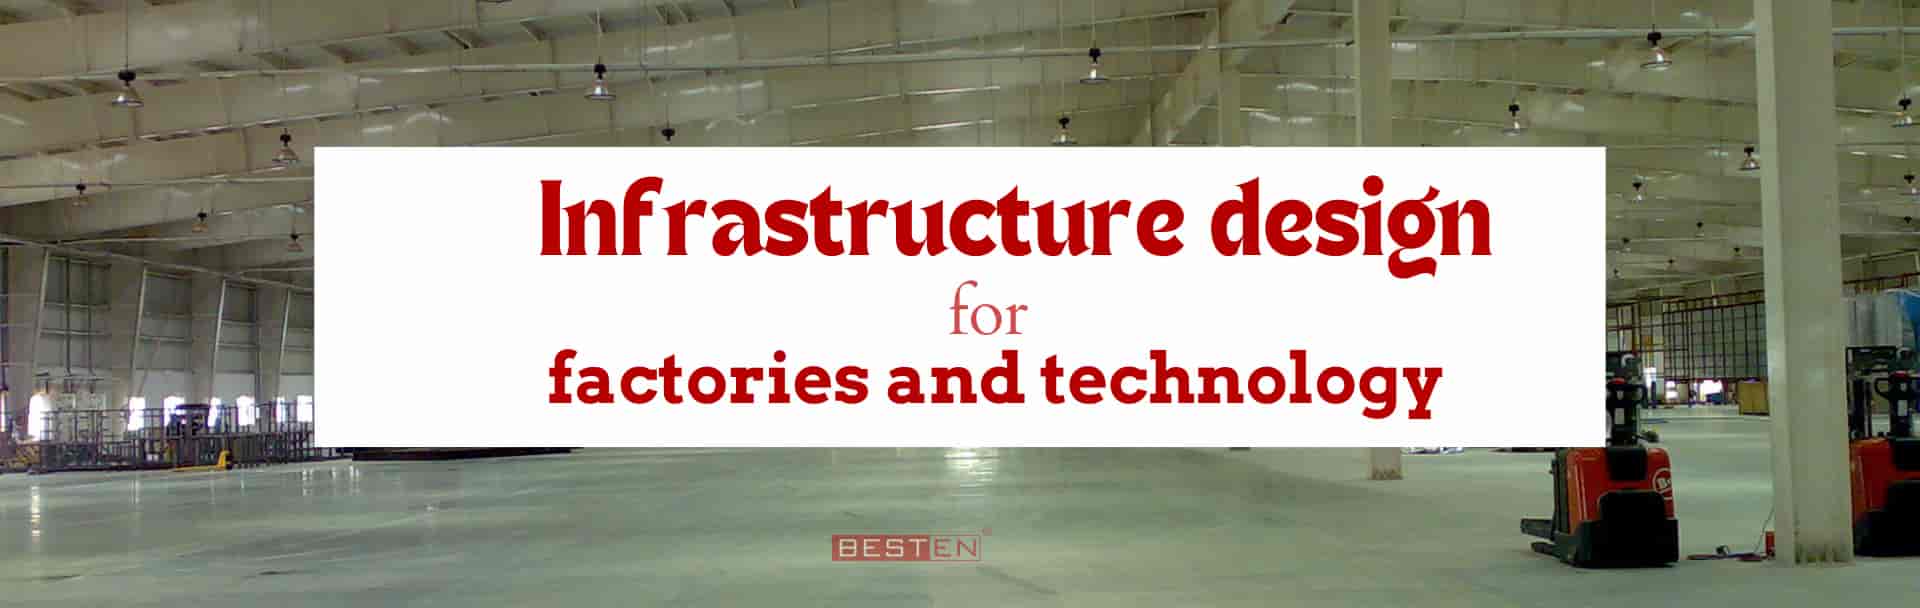 infrastructure design for factories